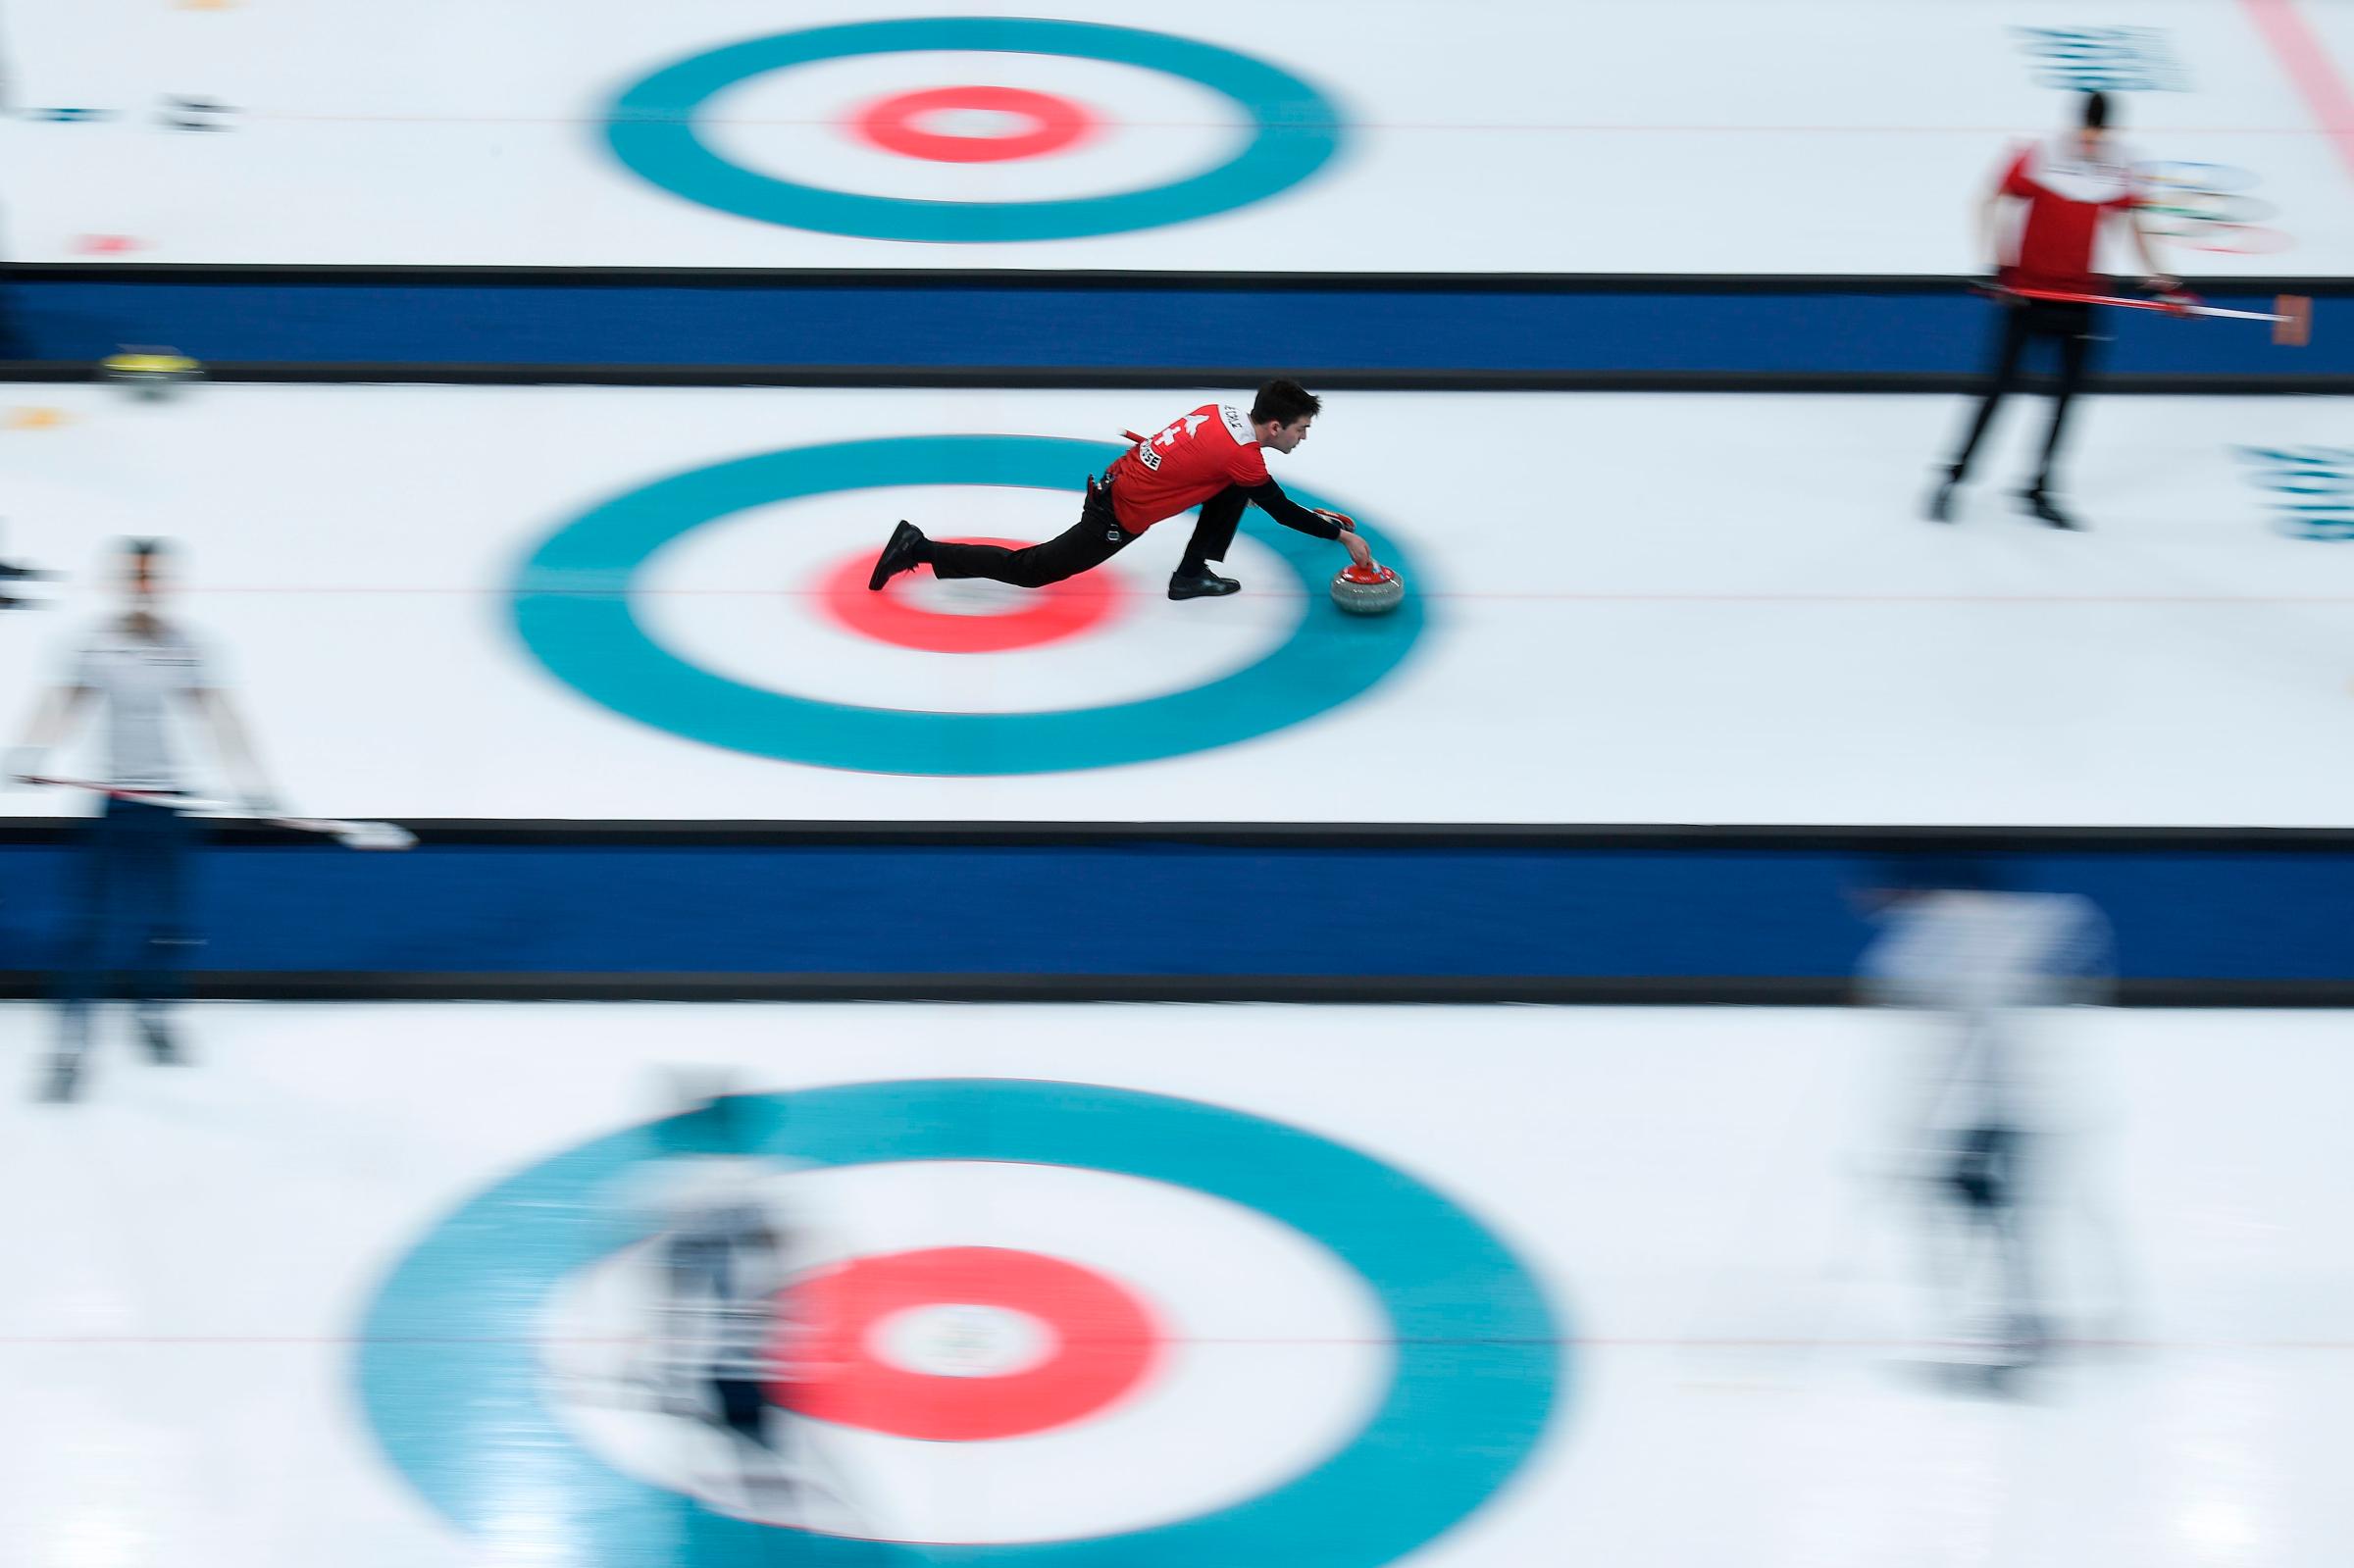 Winter Olympics 2018 Curling